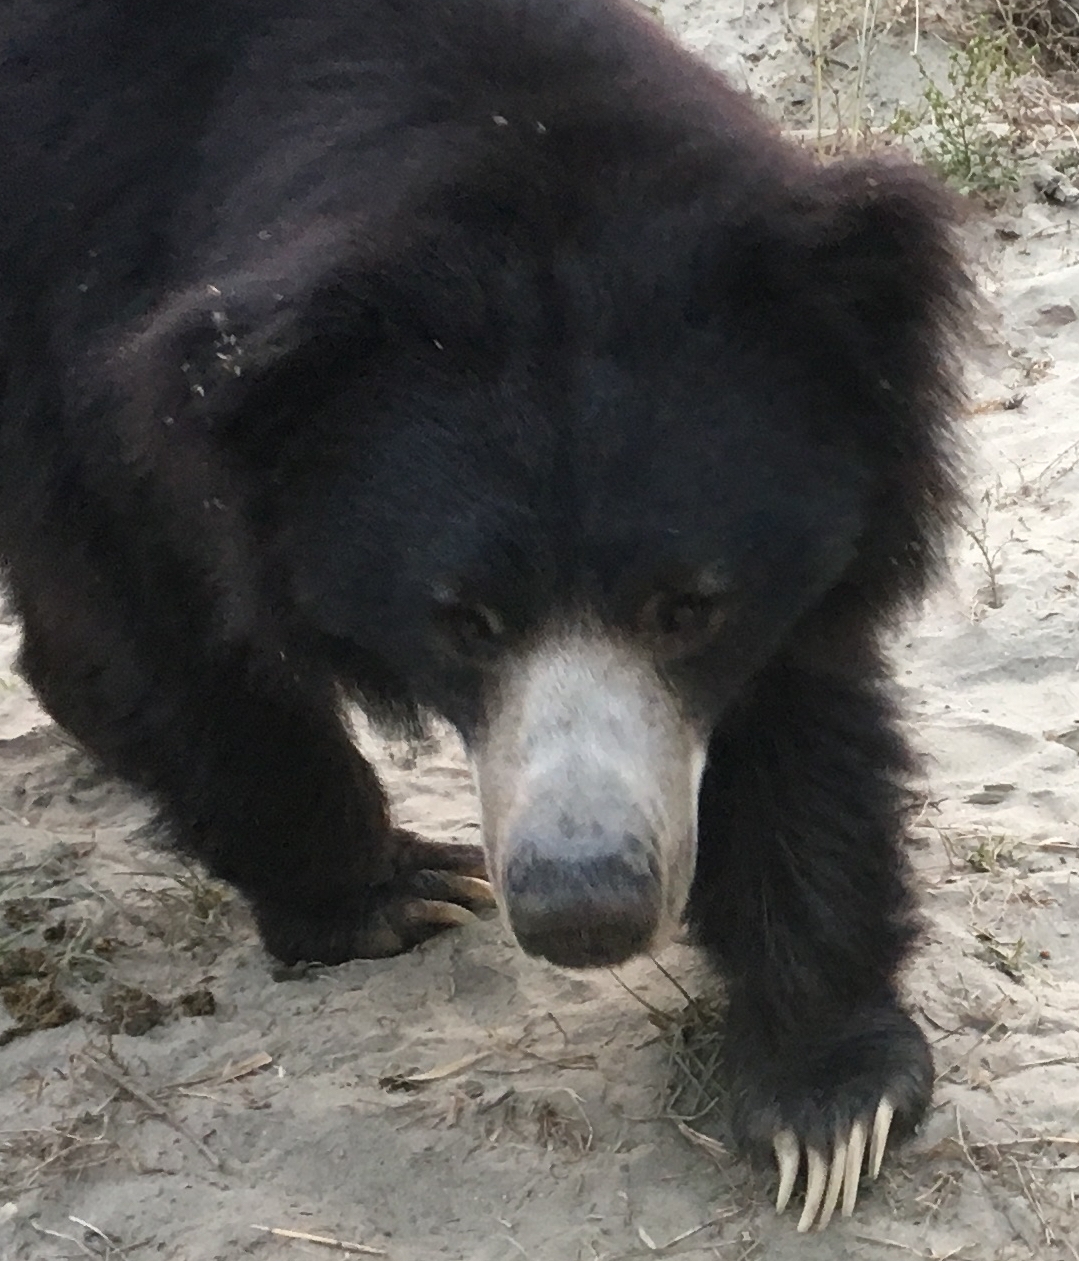 Sloth bear_M ursinus_WSOS Rescue Center Agra India_white muzzle and claws_D Garshelis